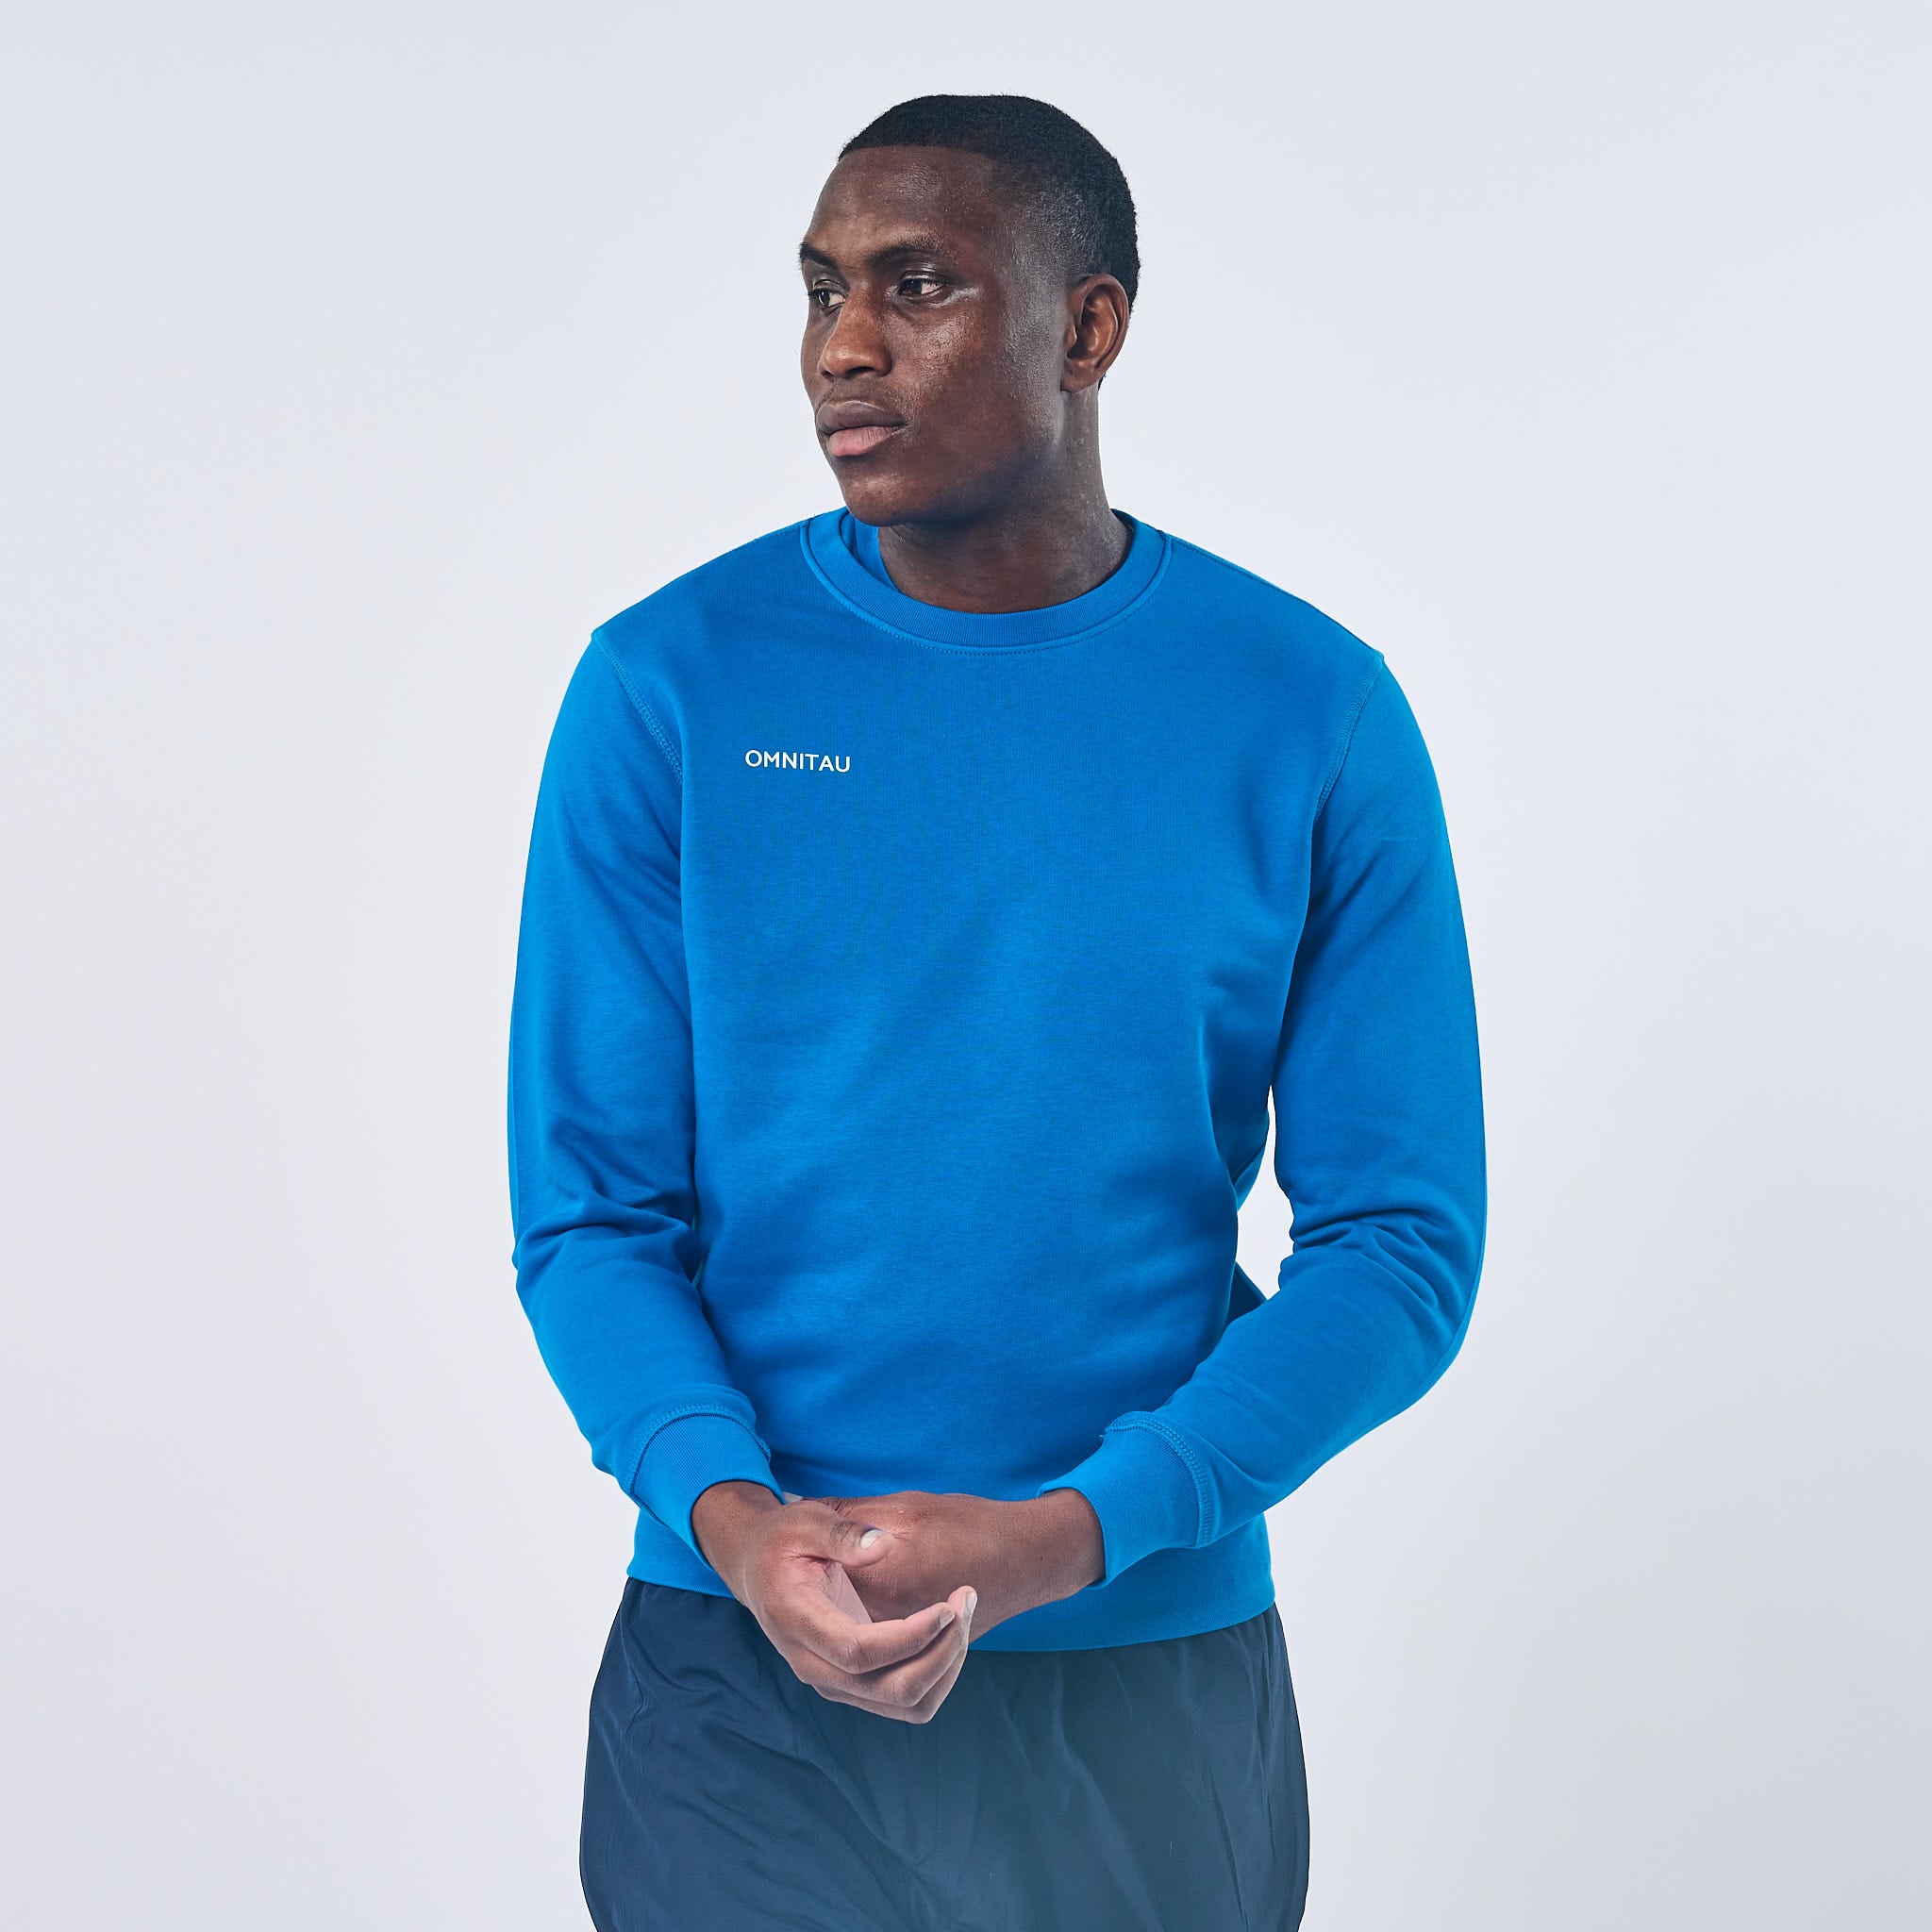 Omnitau Men's Team Sports Organic Cotton Sweatshirt - Royal Blue